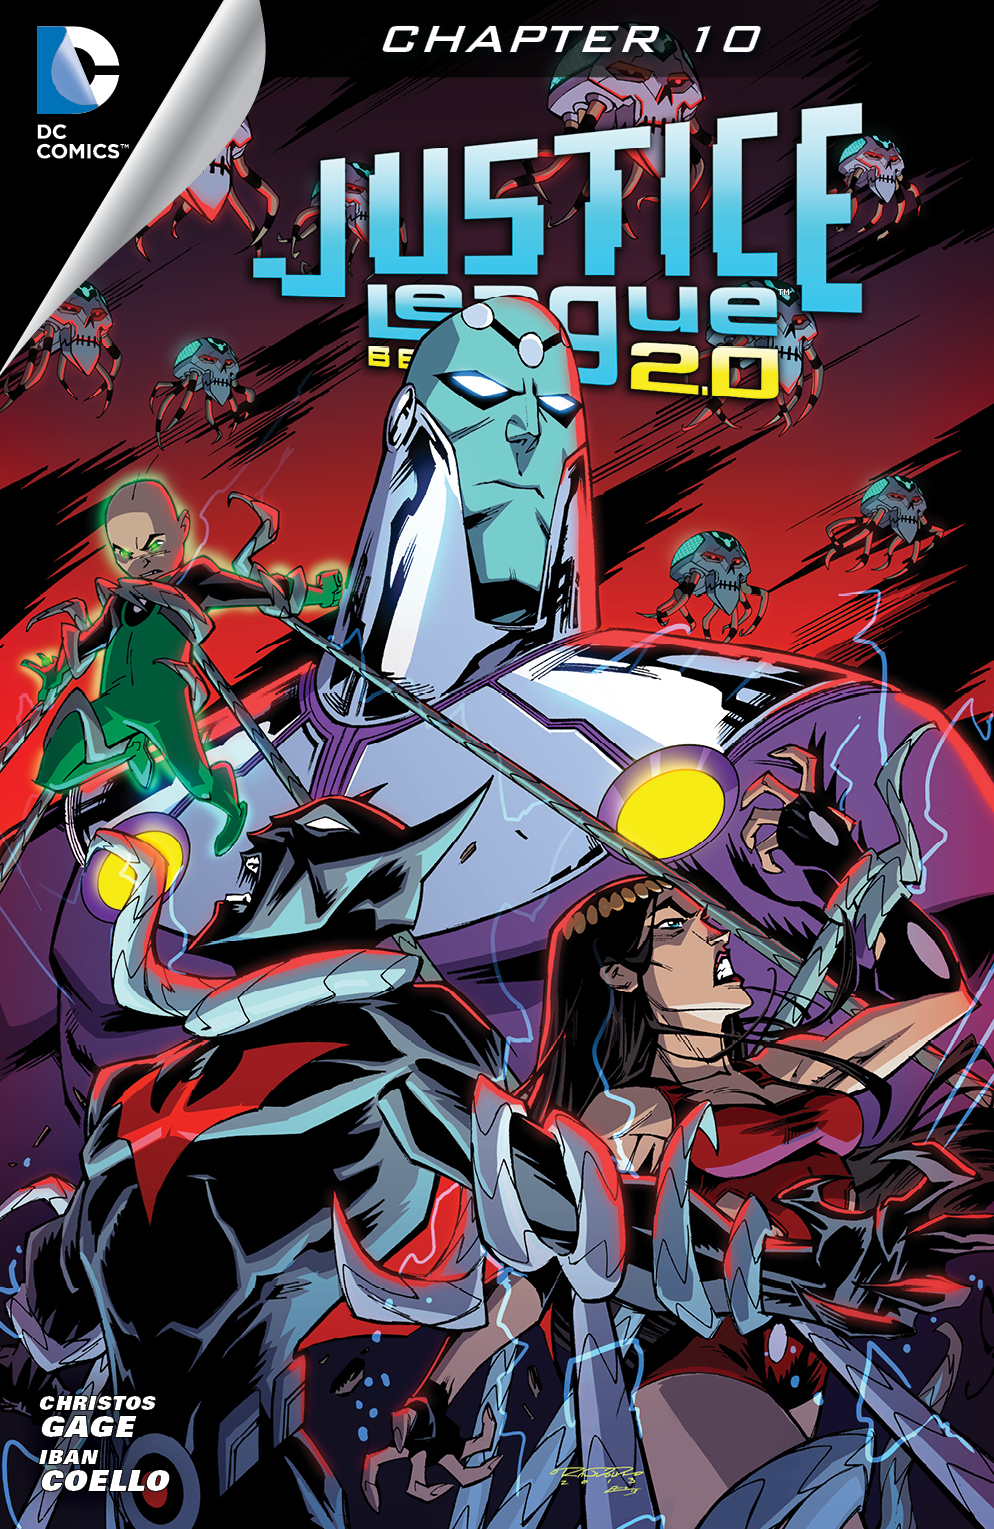 Justice League Beyond 2.0 #10 preview images